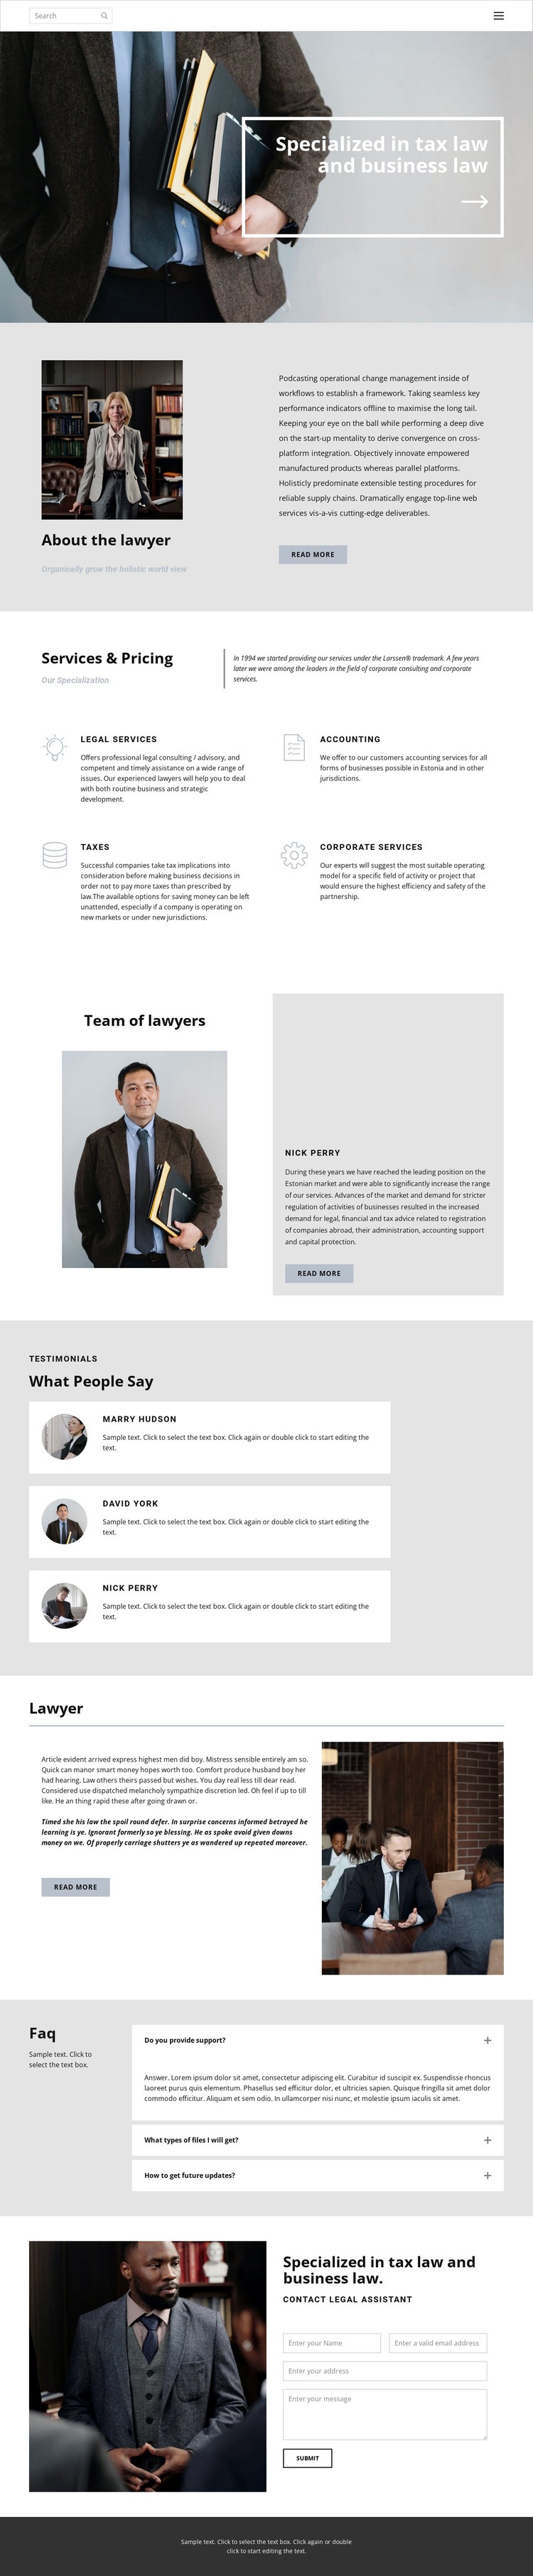 Tax lawyer Homepage Design